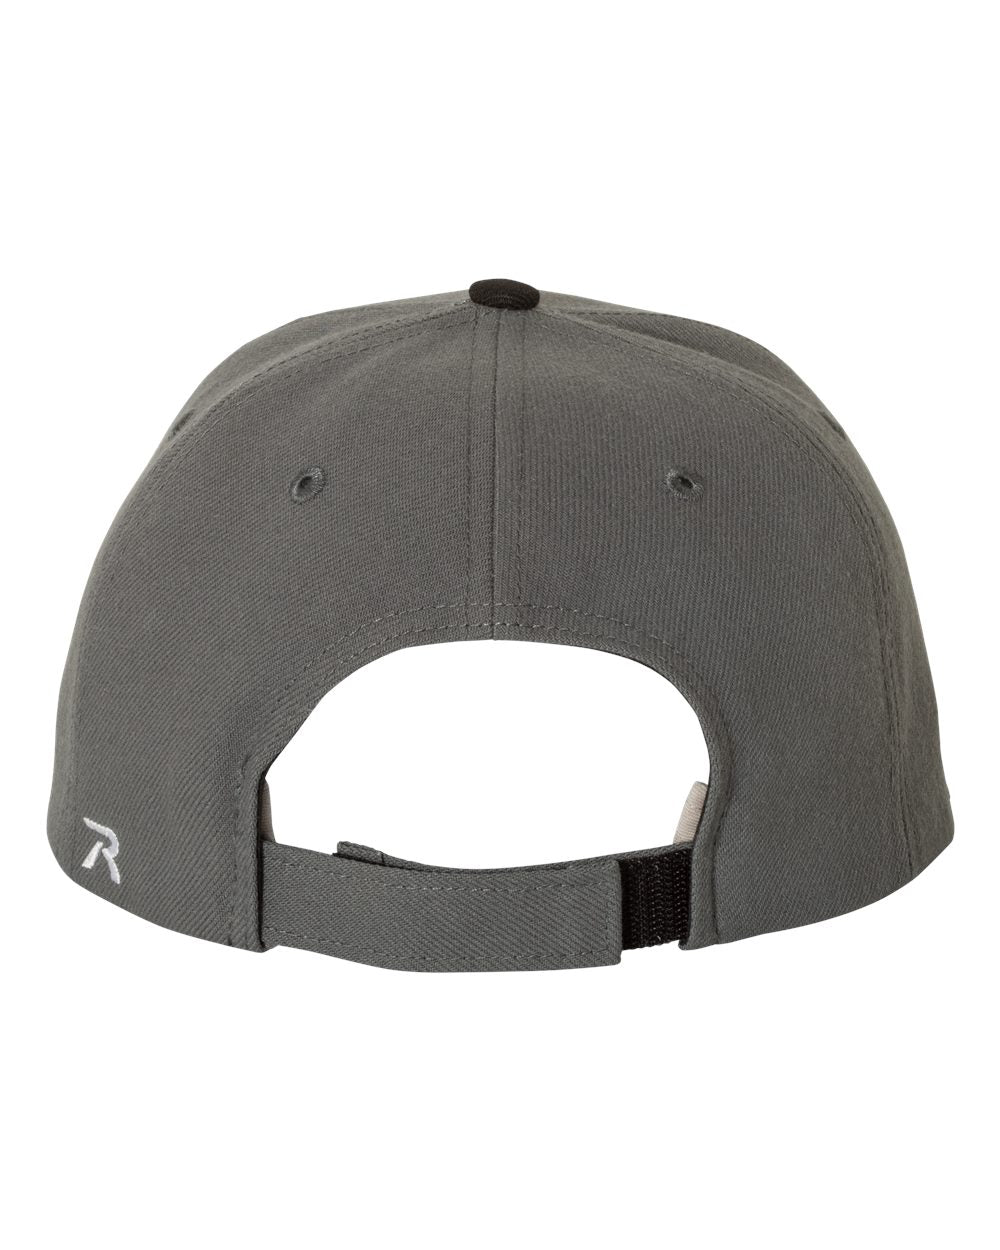 Richardson Surge Adjustable Customized Caps, Charcoal Black